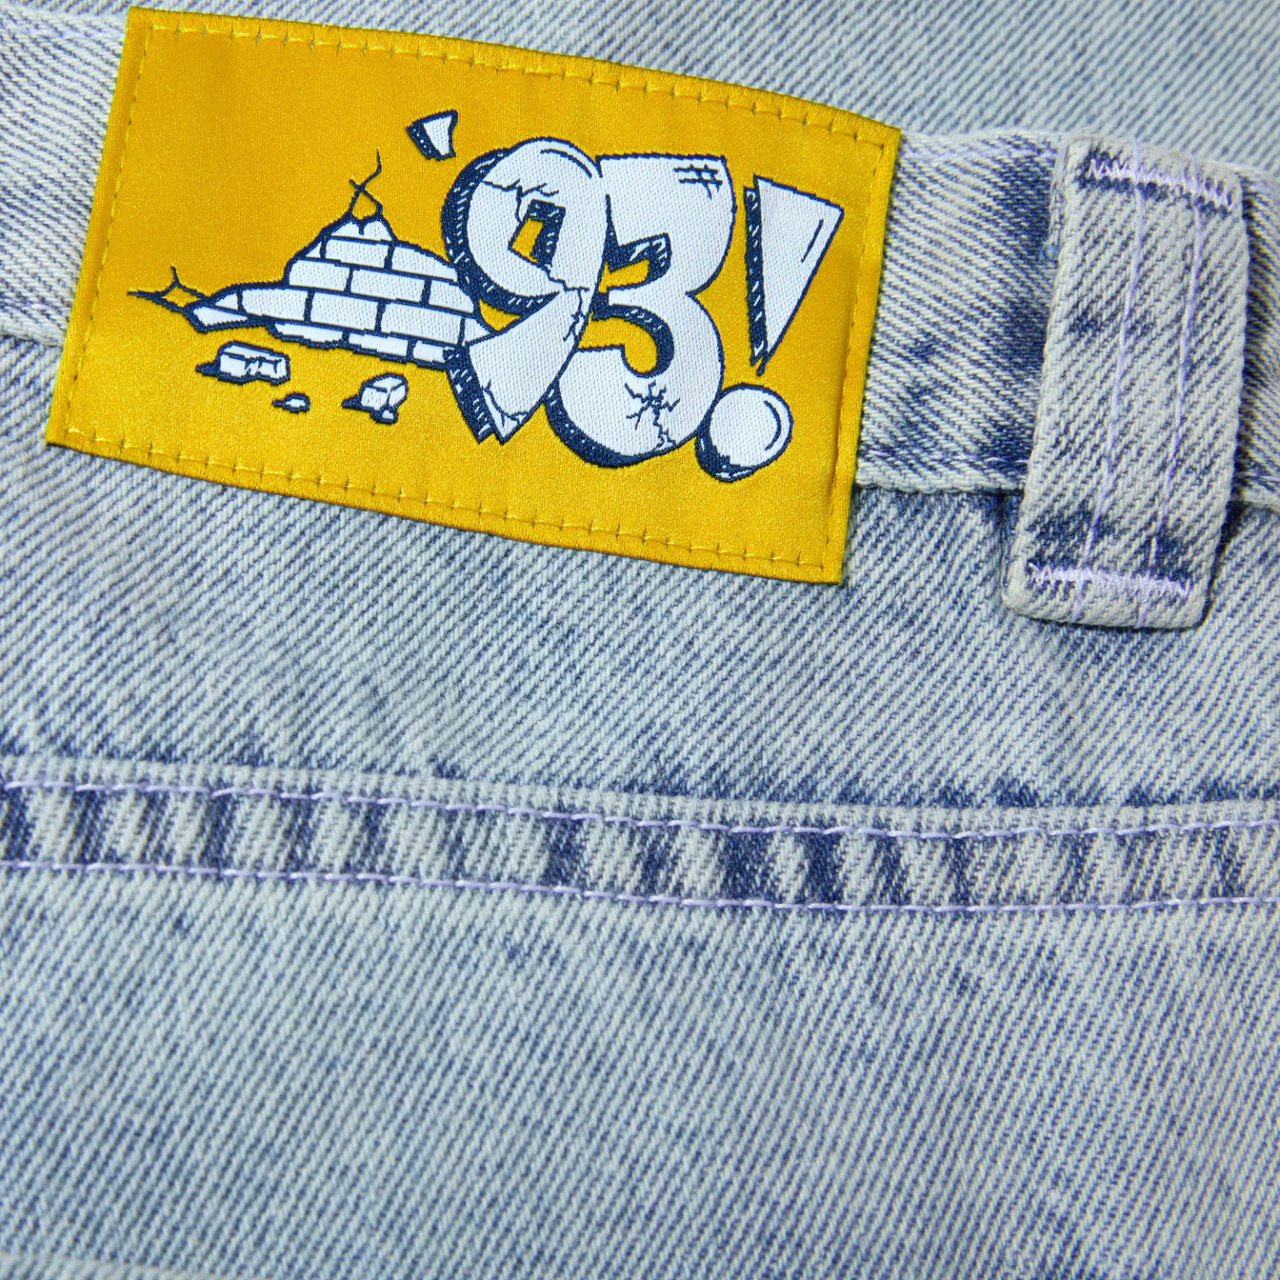 Polar 93! Workpants - Ice Blue - Influence Boardshop